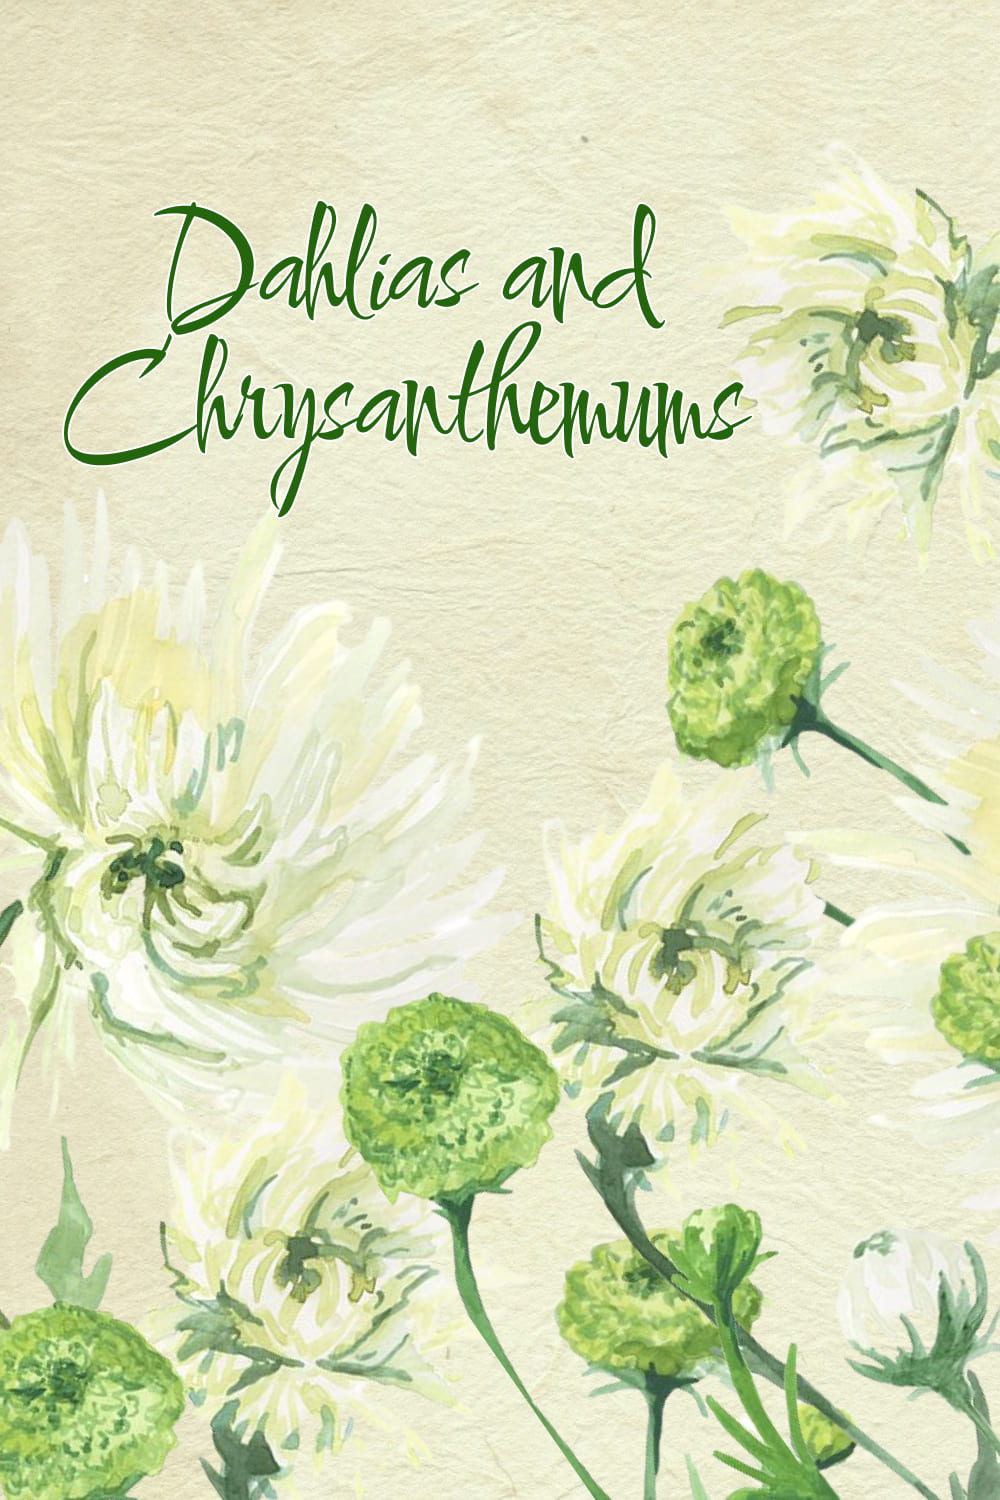 Watercolor Chrysanthemums & Dahlias - preview image.